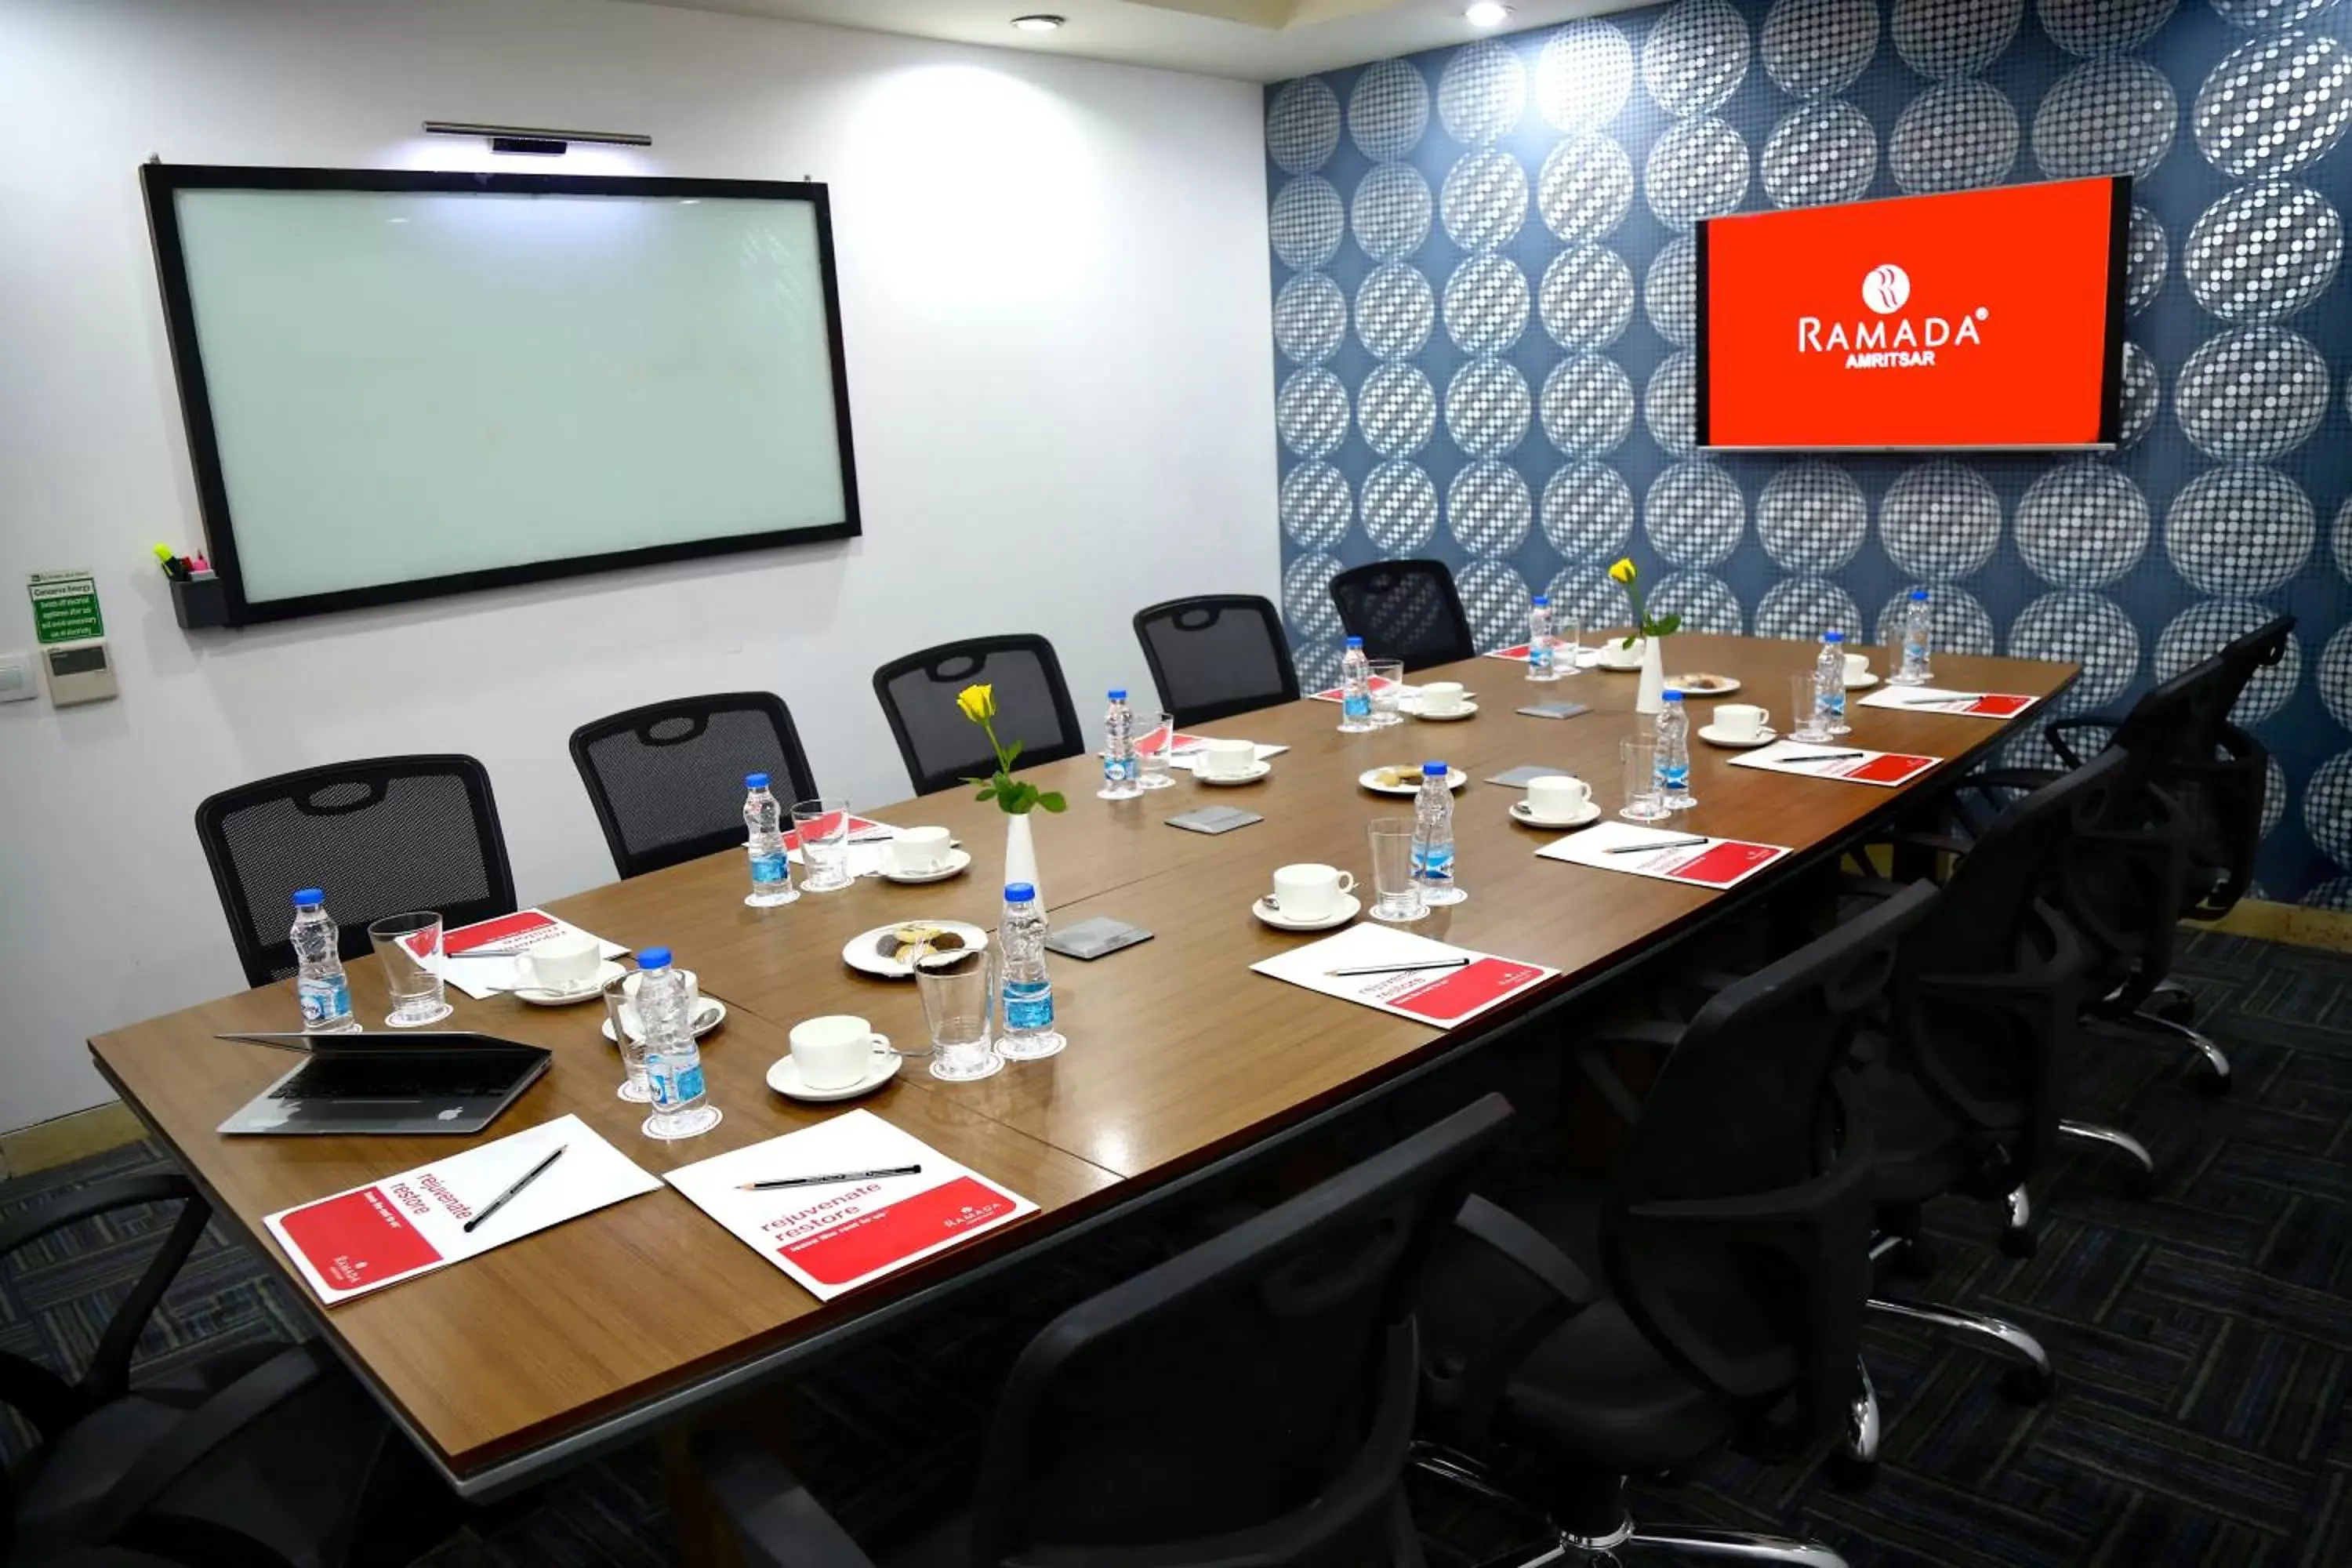 Meeting/conference room in Ramada Amritsar